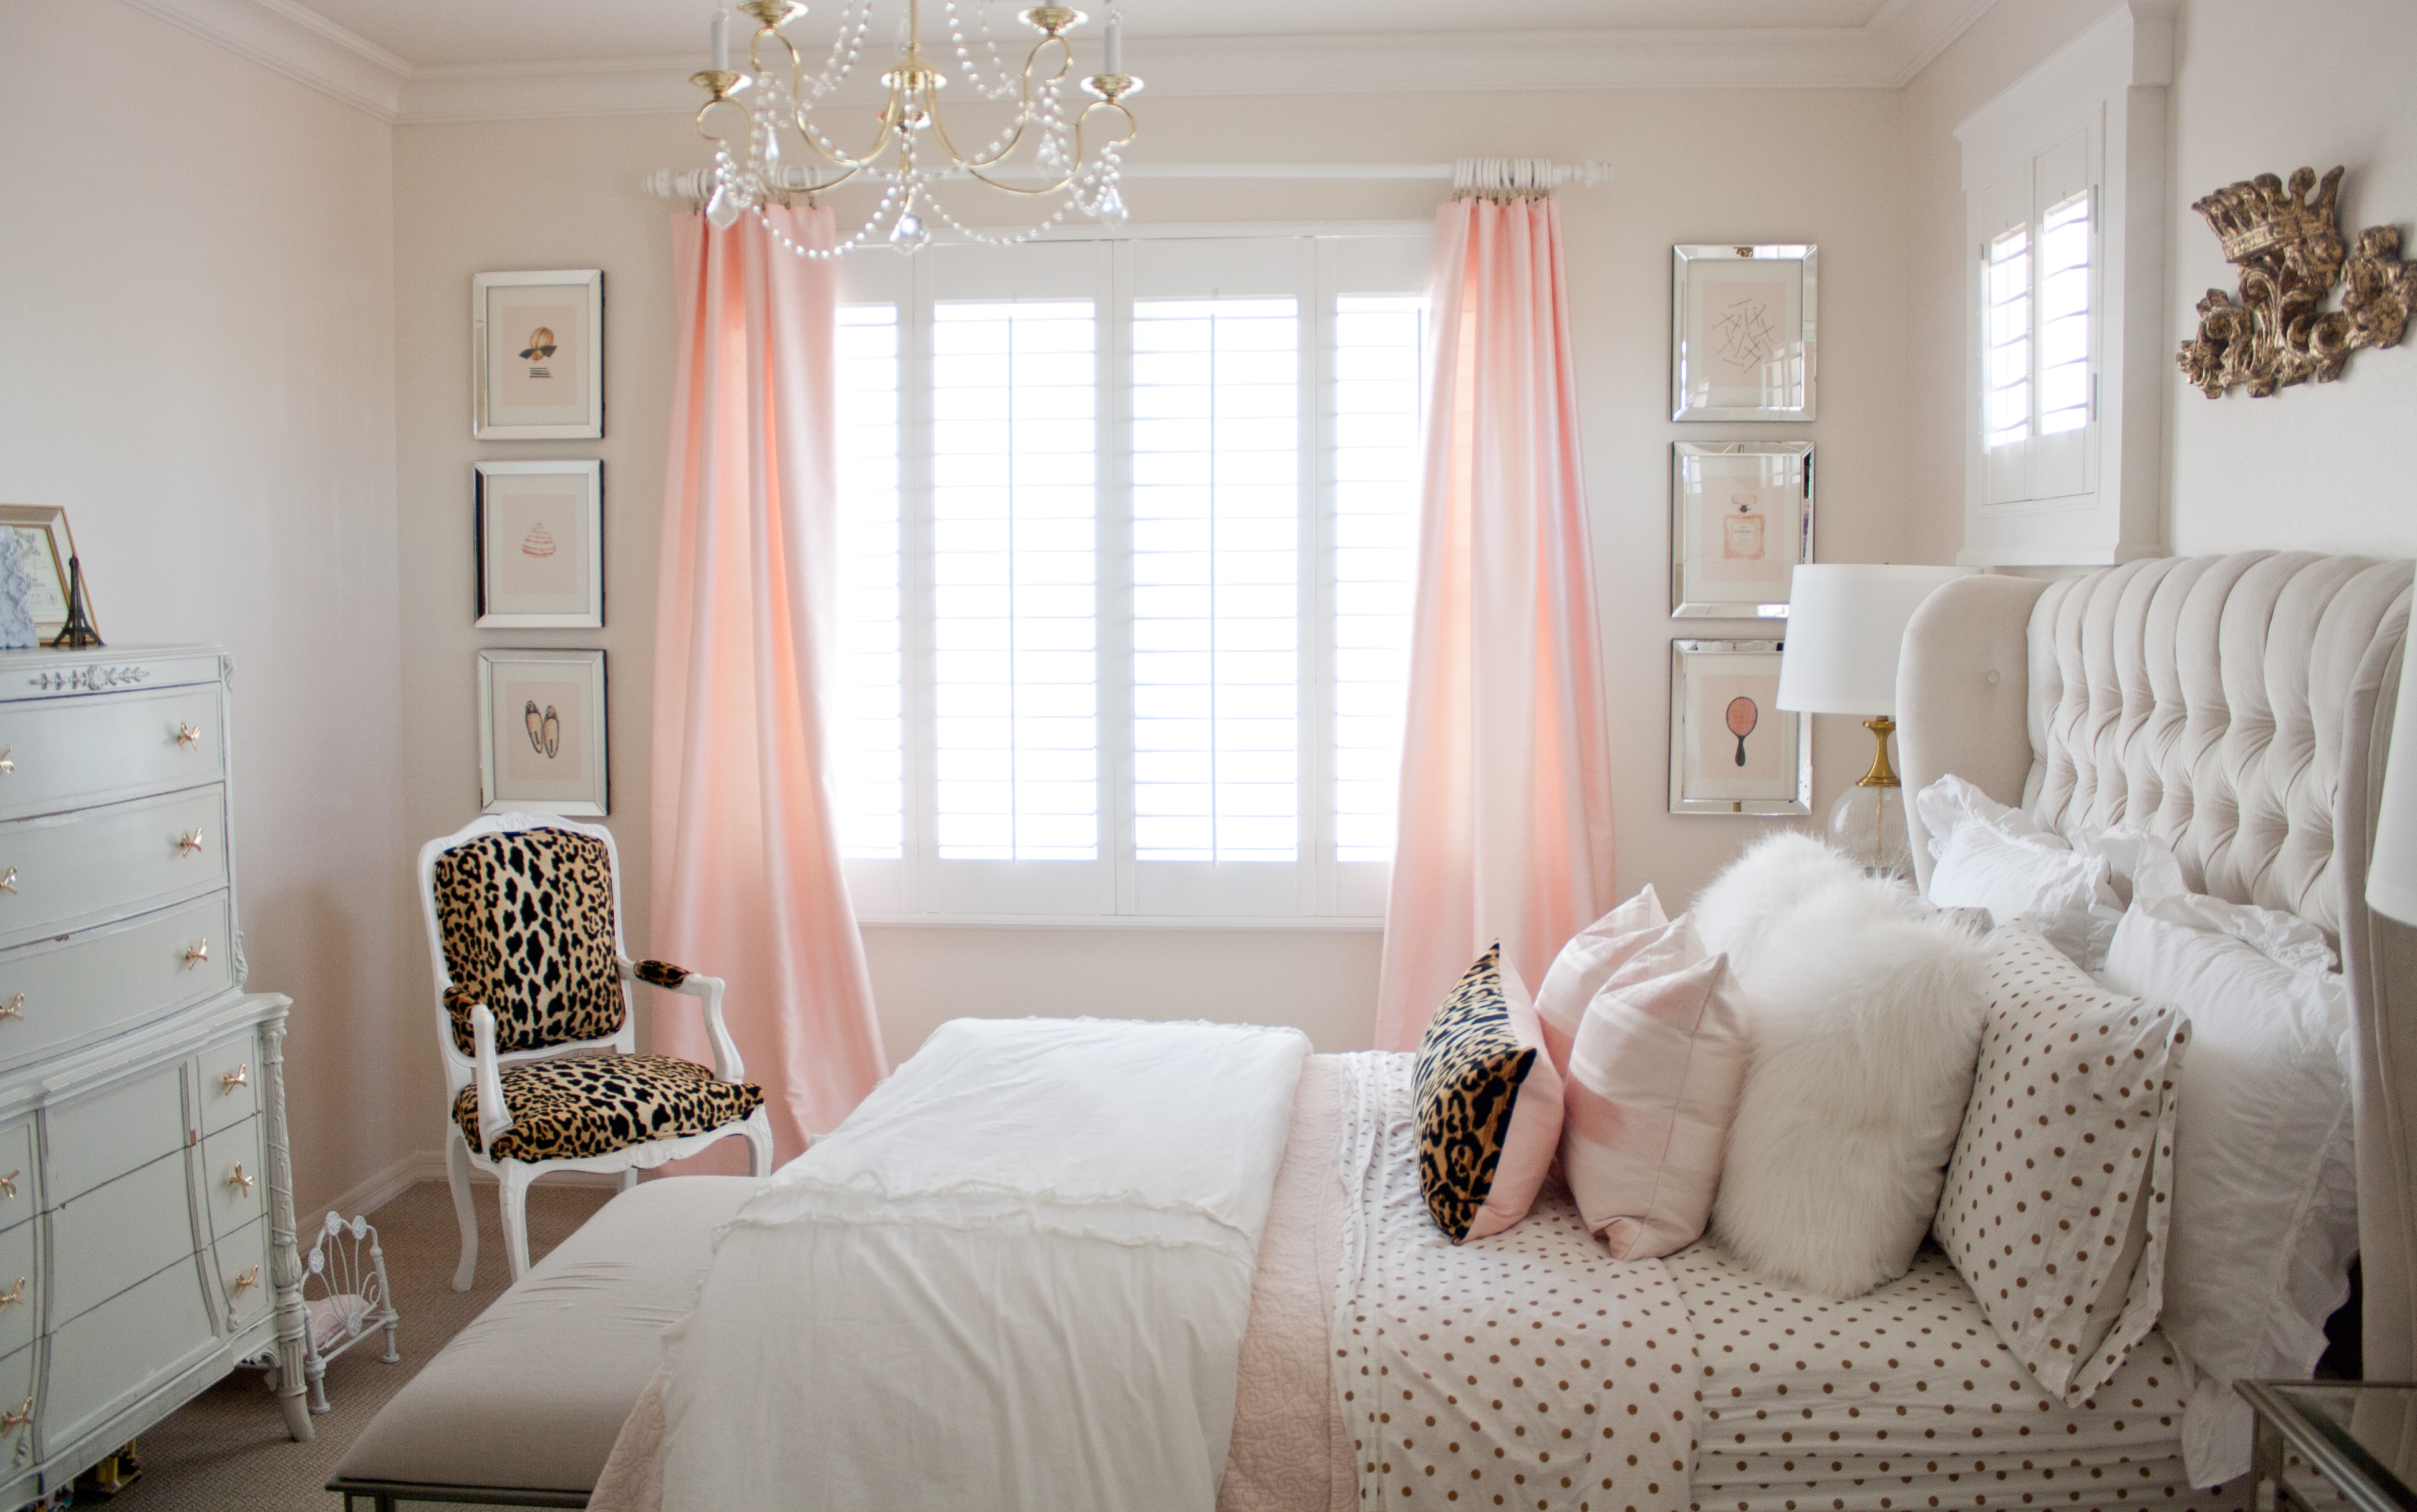 Pink and Gold Girls Bedroom - Honeybear Lane